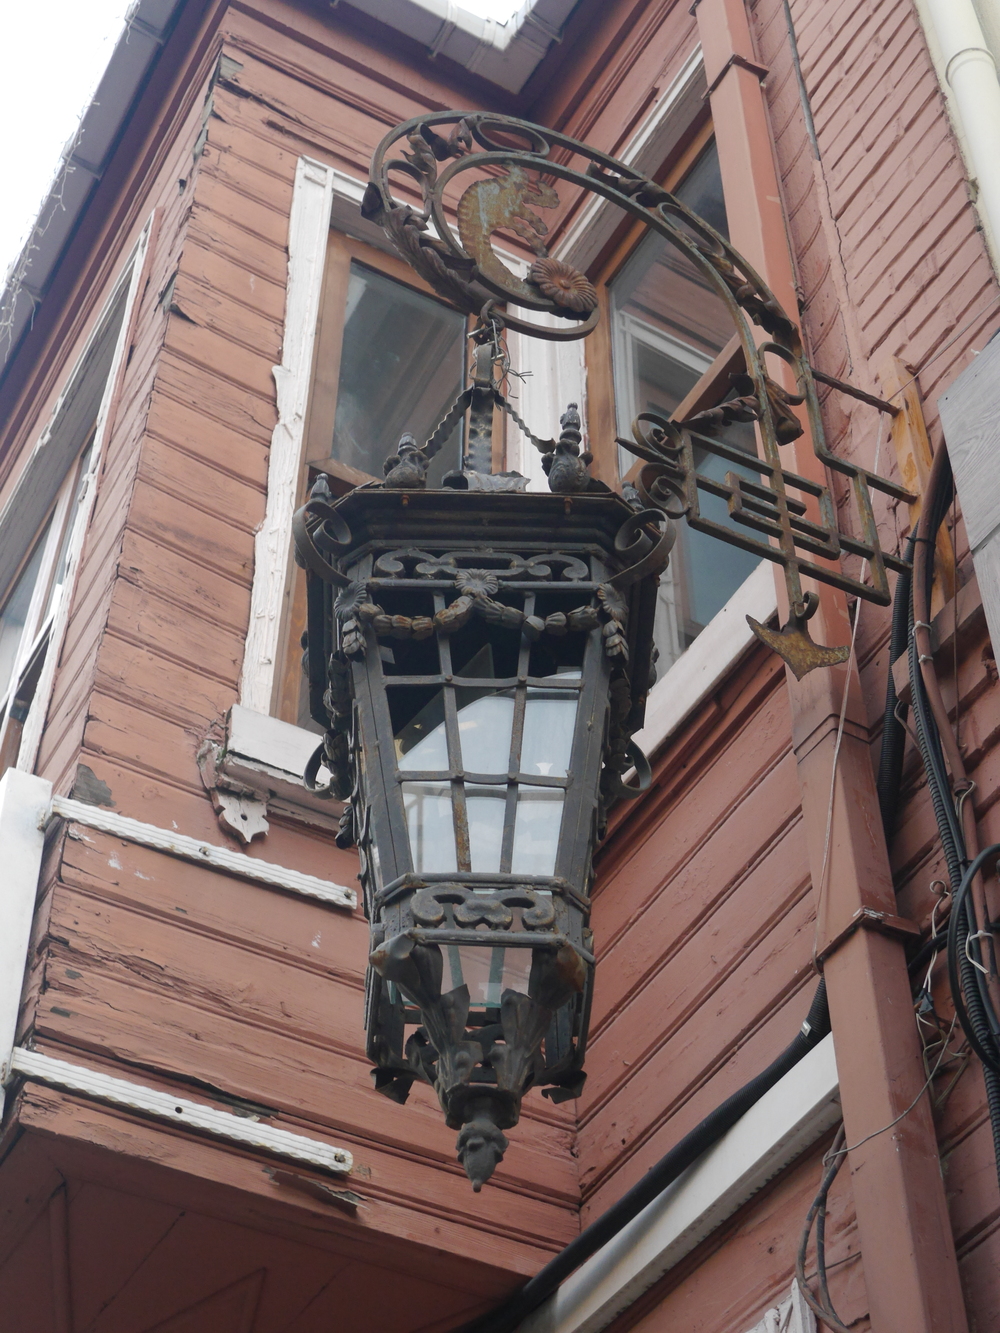  A cool old lantern. 